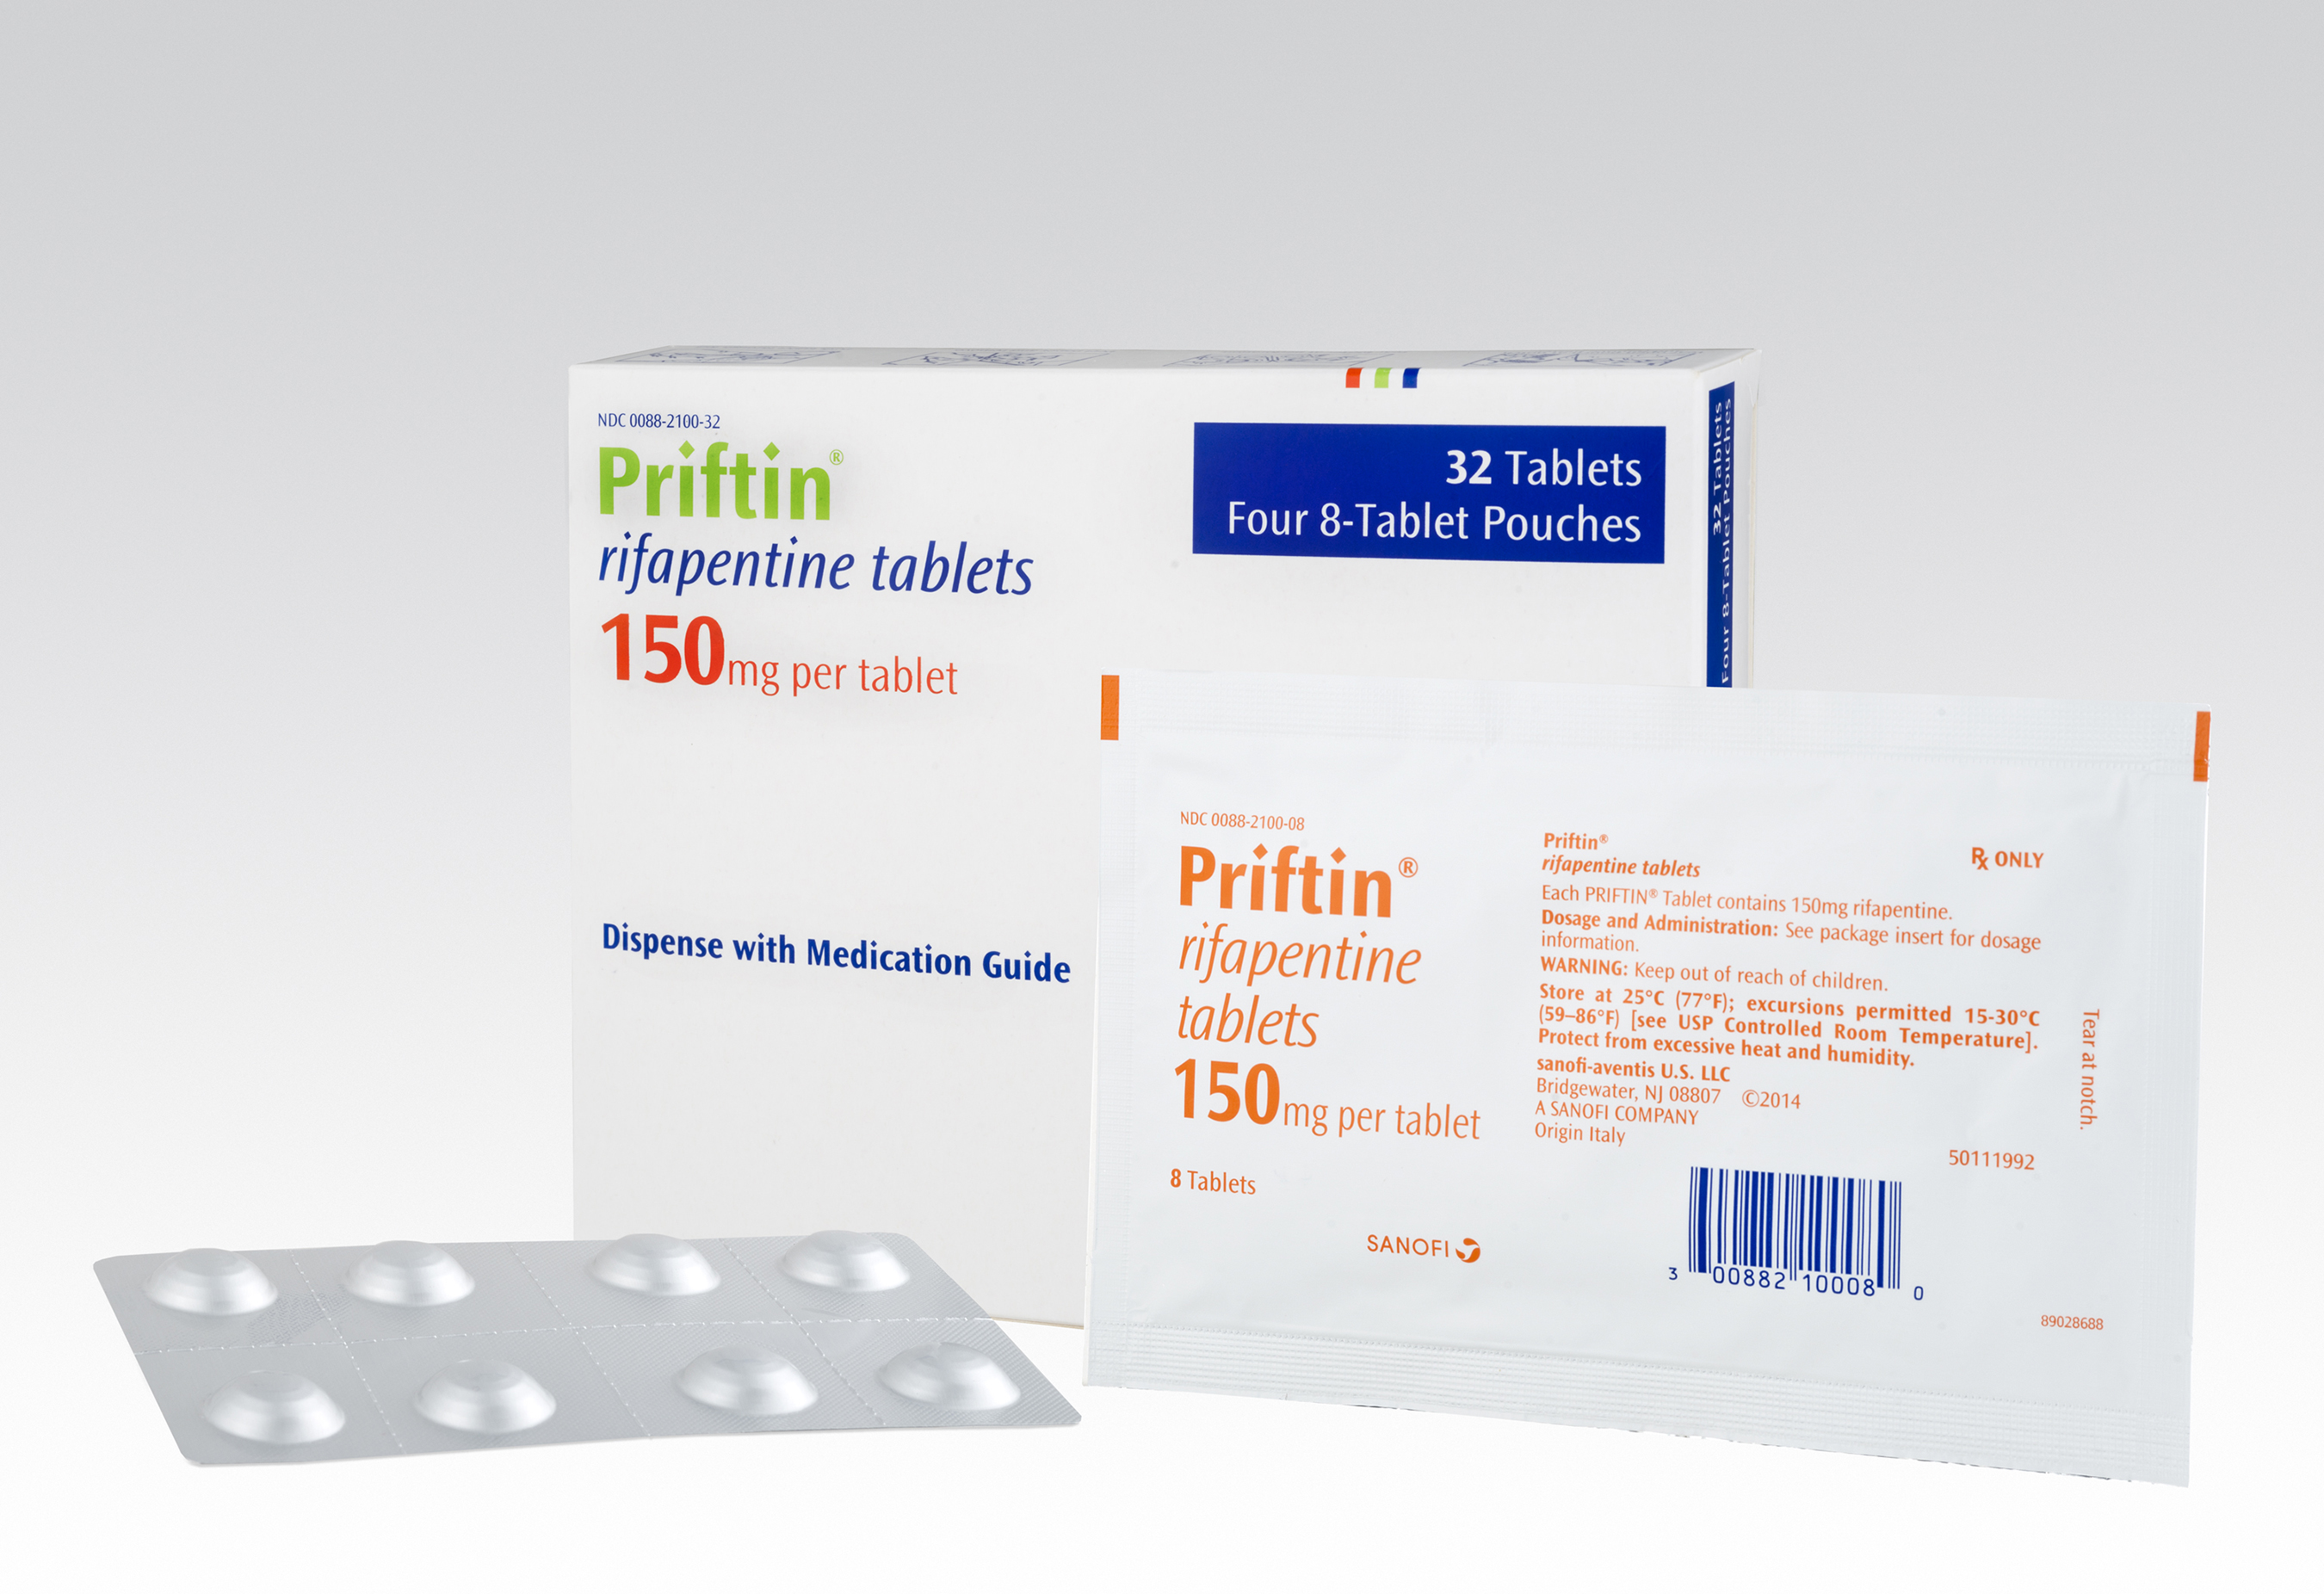 Priftin® rifapentine tablets 150mg 32 tablets